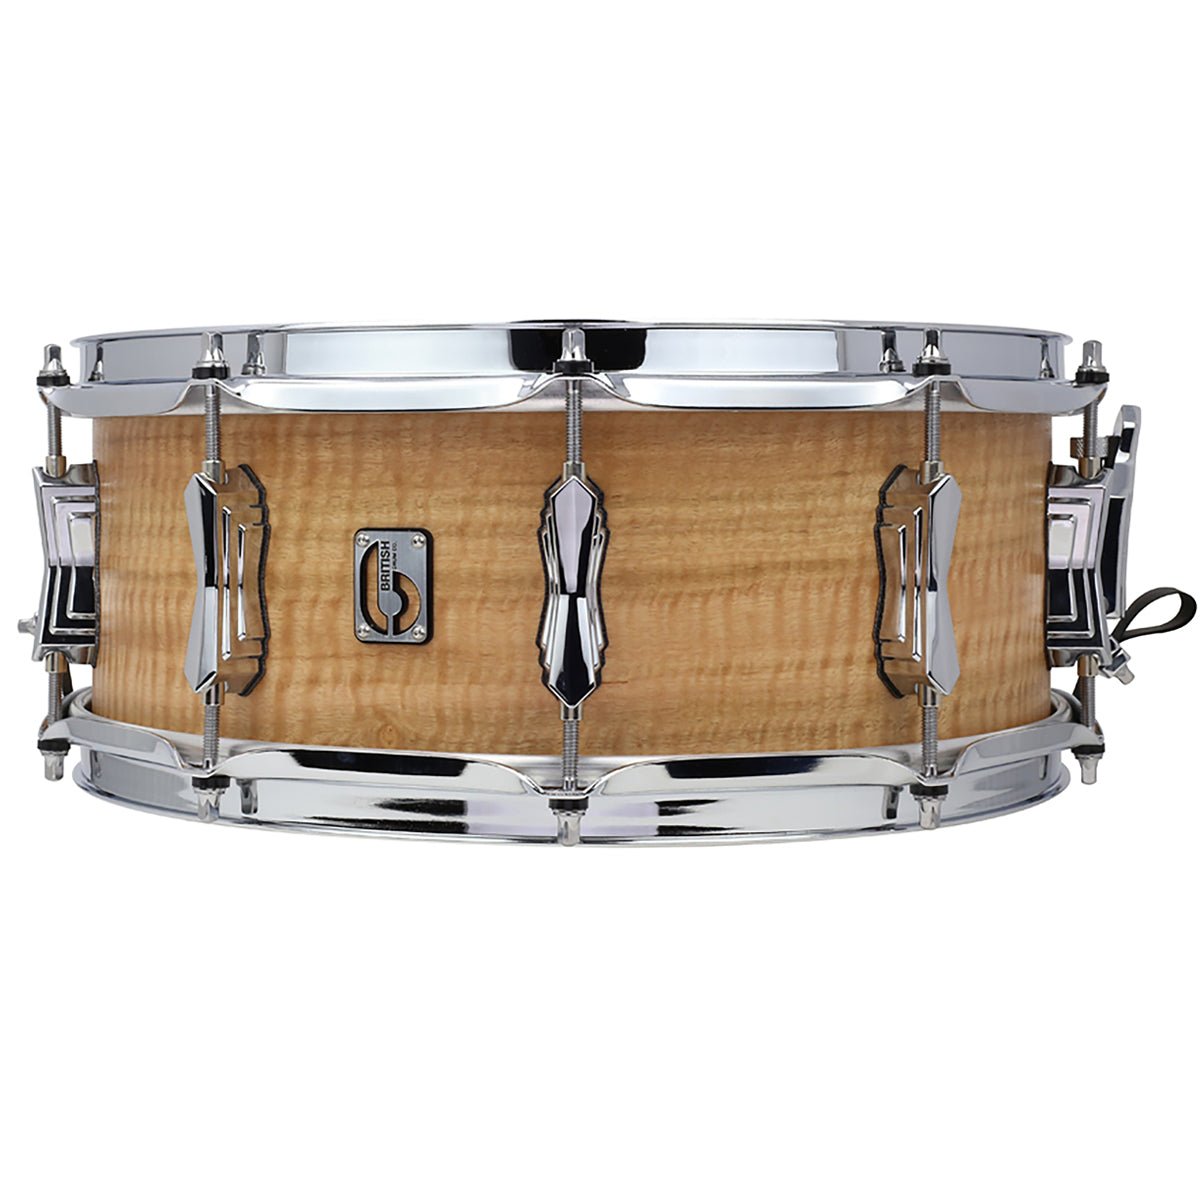 British Drum Company MAV-1455-SN 'Maverick' 14" x 5.5" Maple Snare Drum